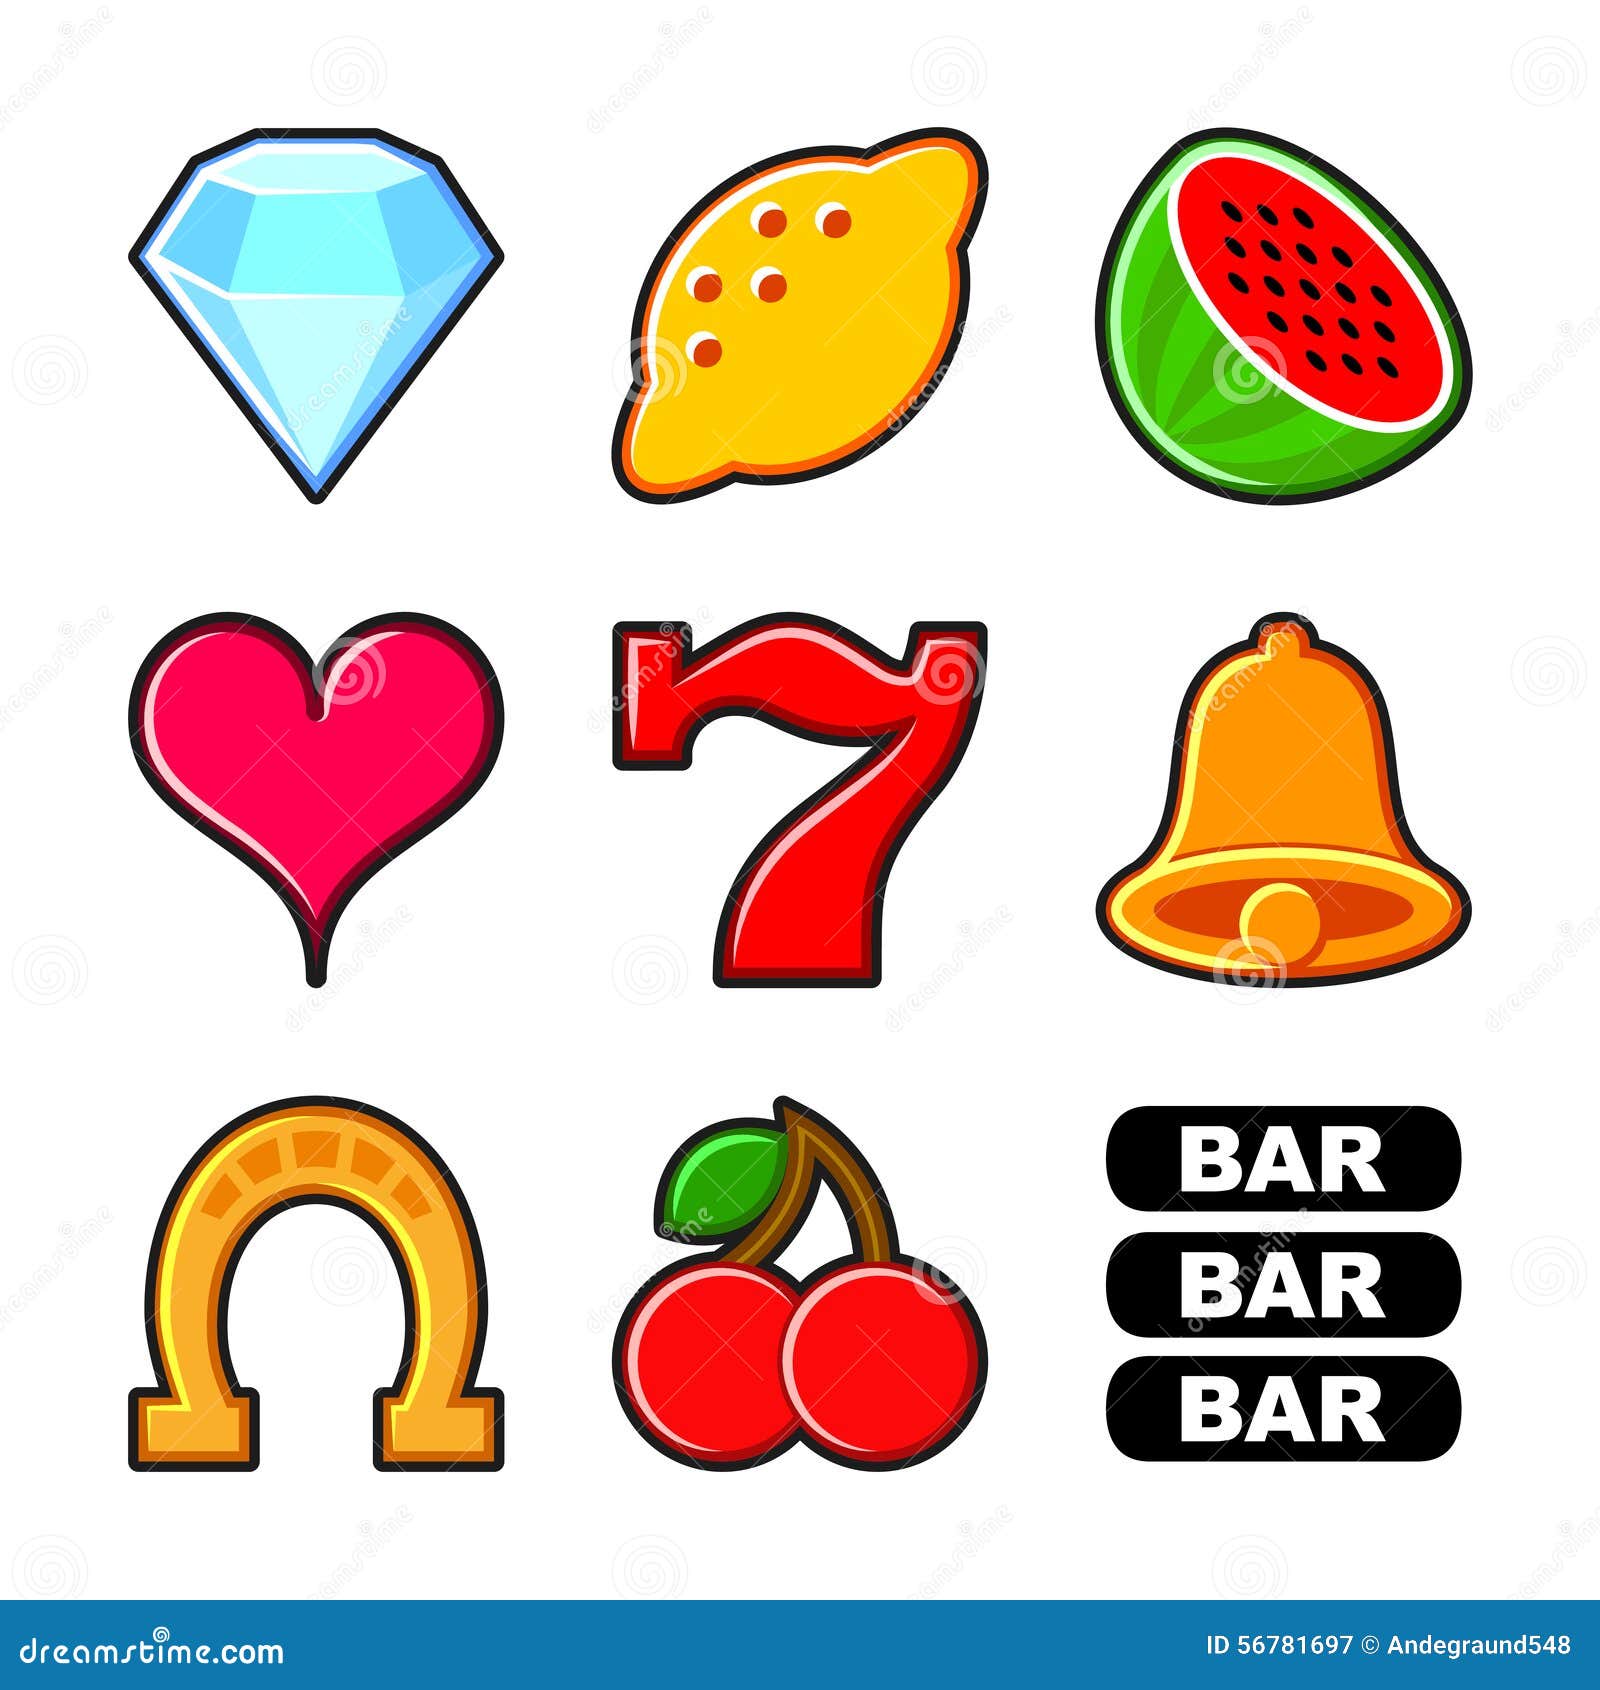 Slot machine icons set stock vector. Illustration of design - 56781697